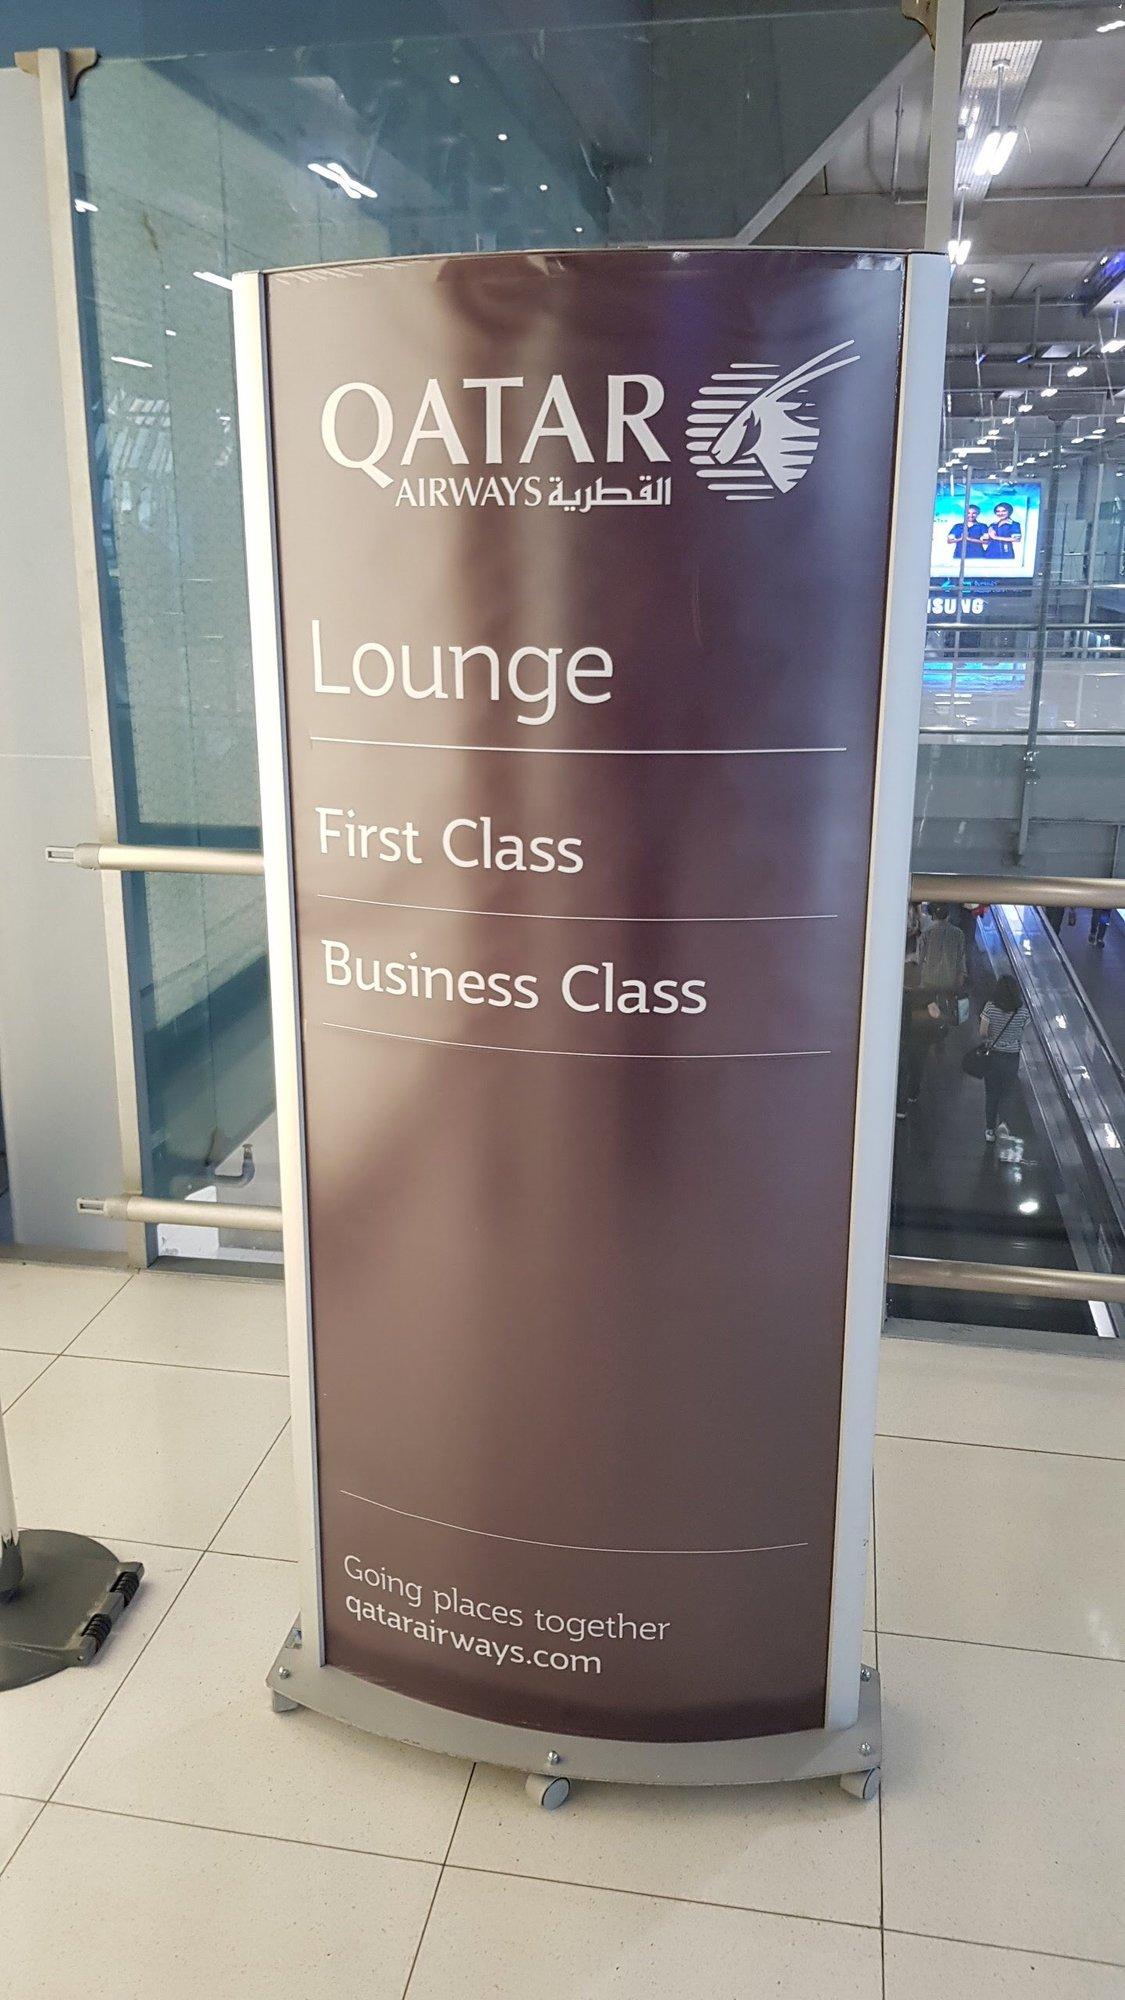 Qatar Airways Premium Lounge image 43 of 52